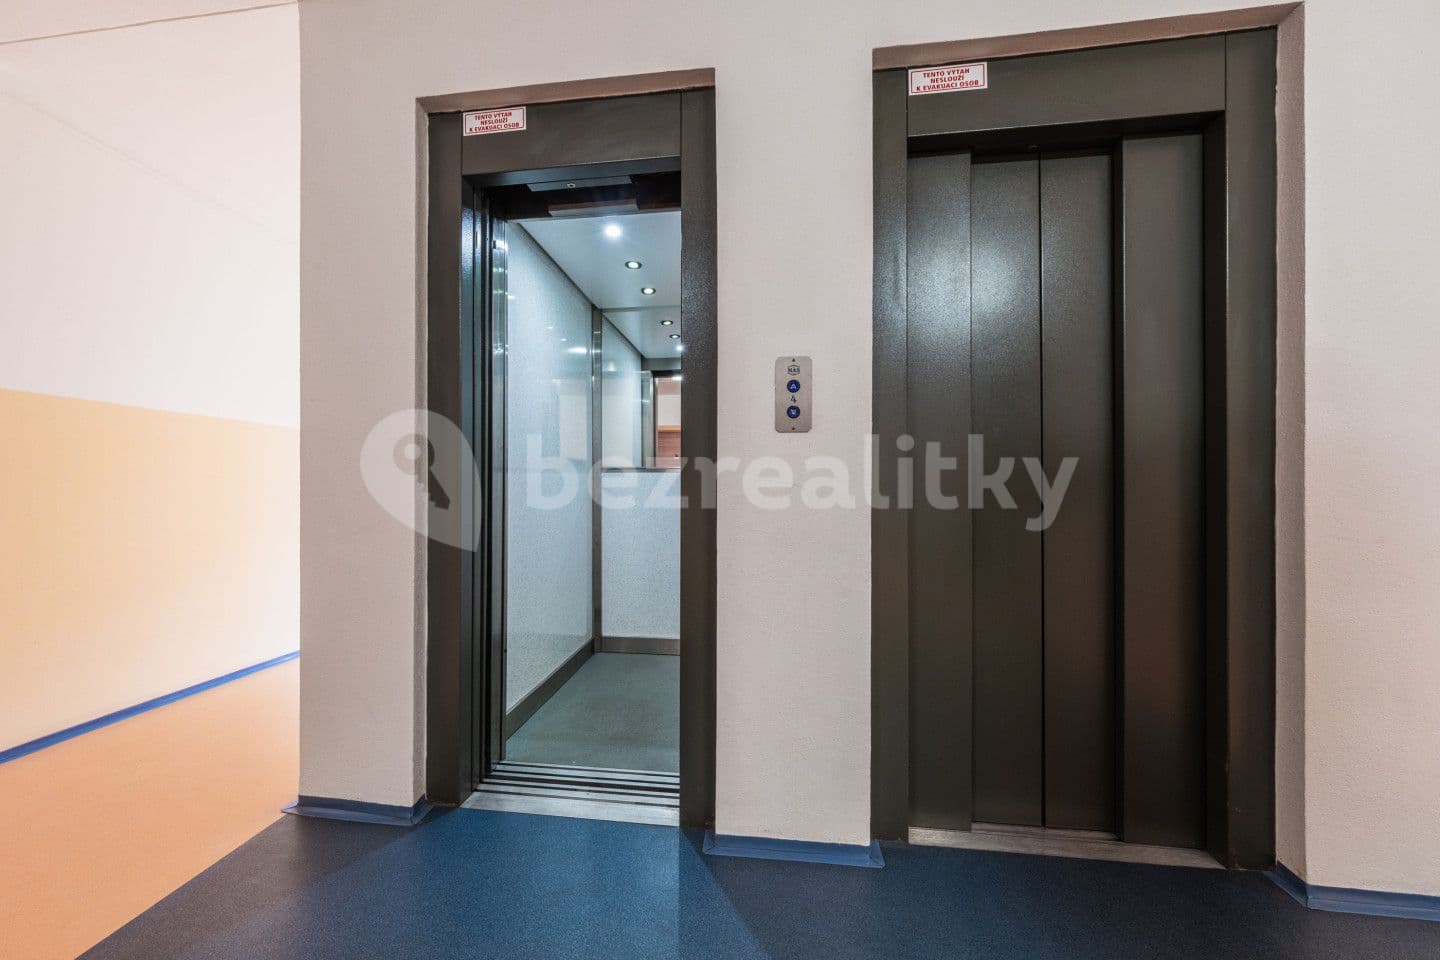 2 bedroom with open-plan kitchen flat for sale, 61 m², Lečkova, Prague, Prague